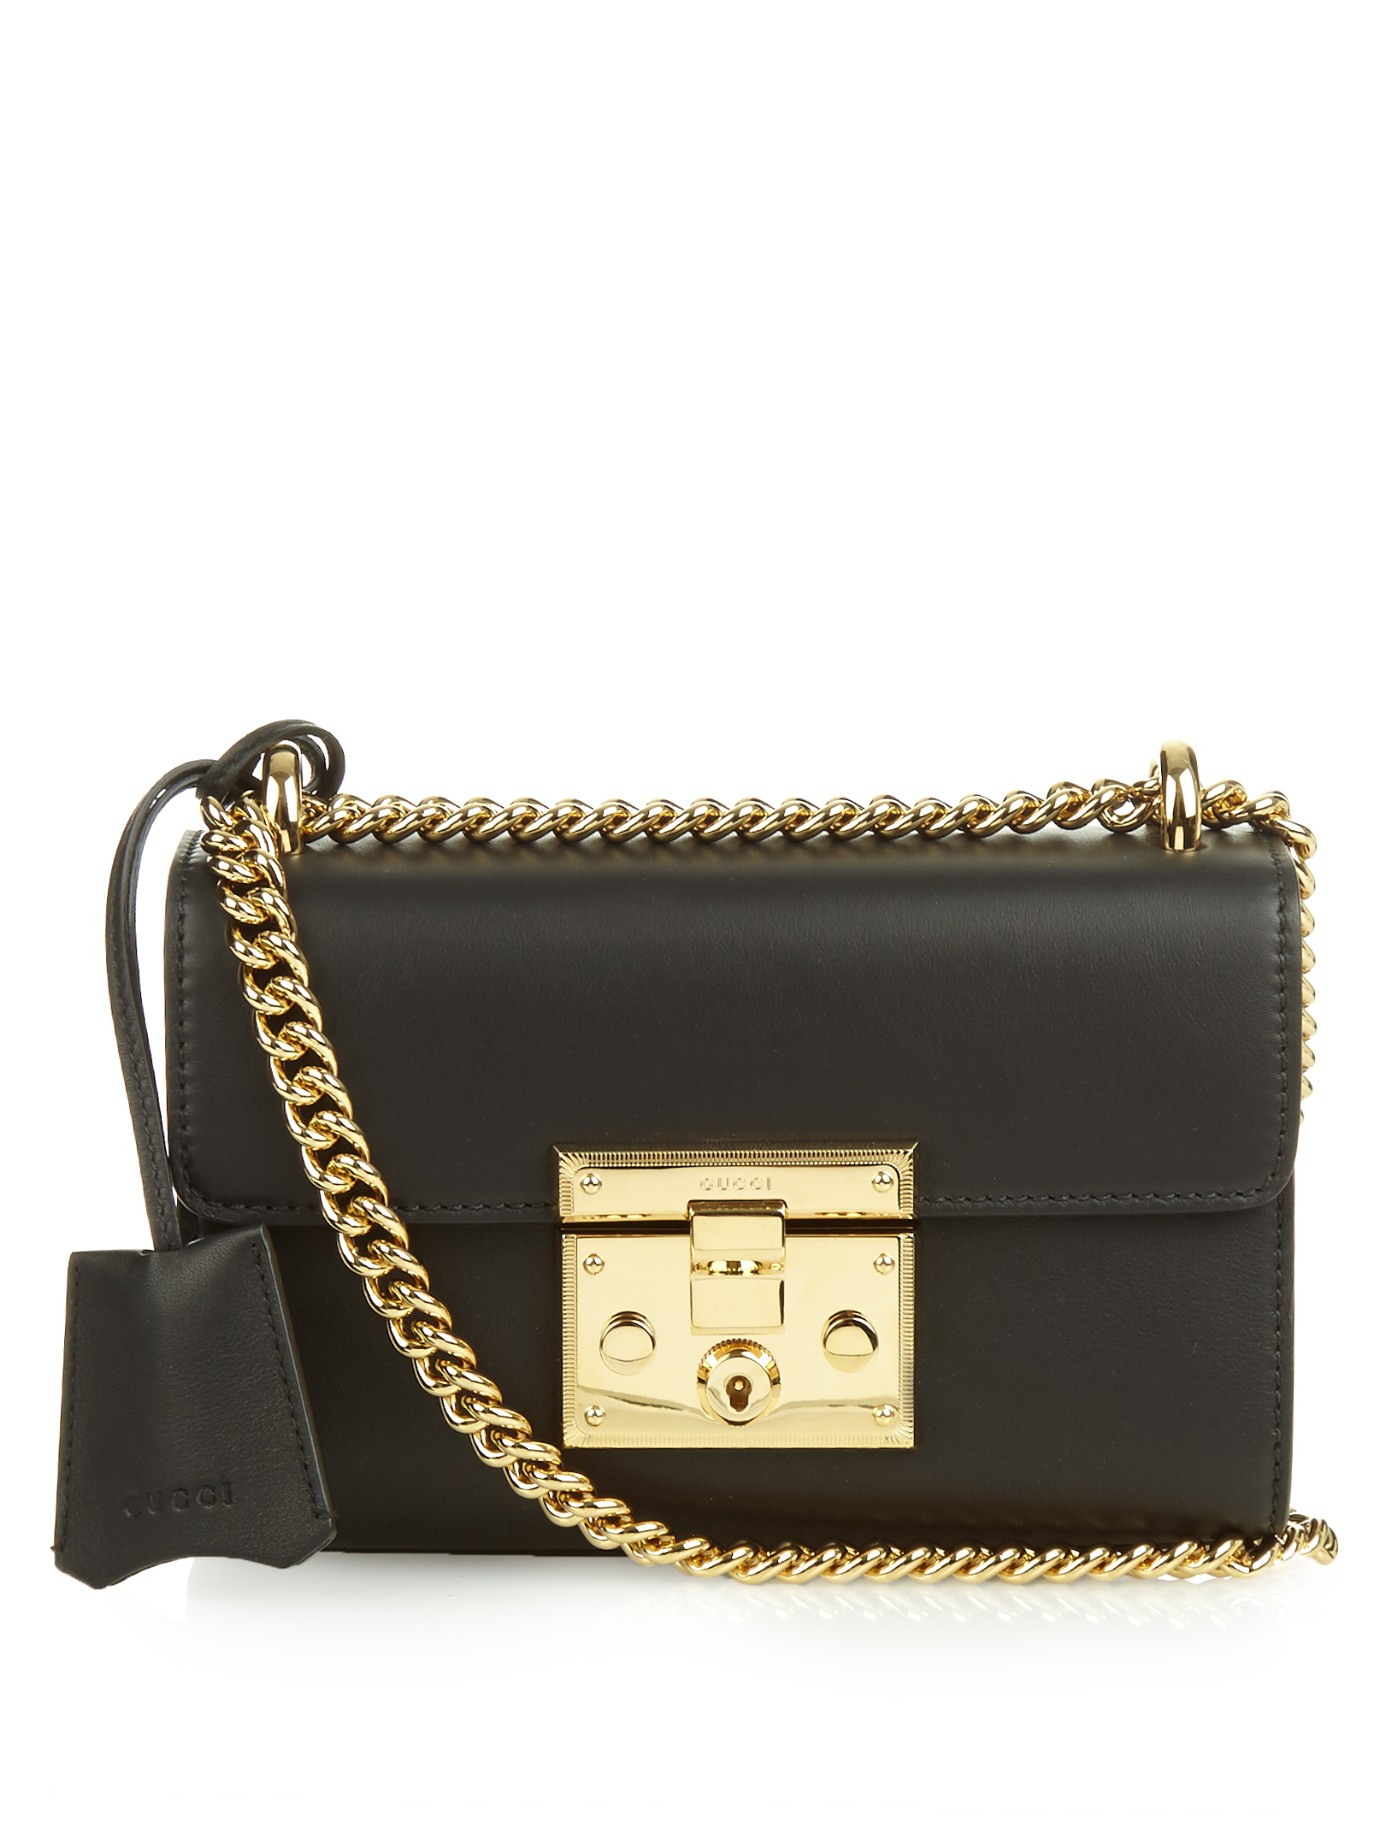 Gucci Padlock Mini Leather Shoulder Bag in Black Leather (Black) - Lyst